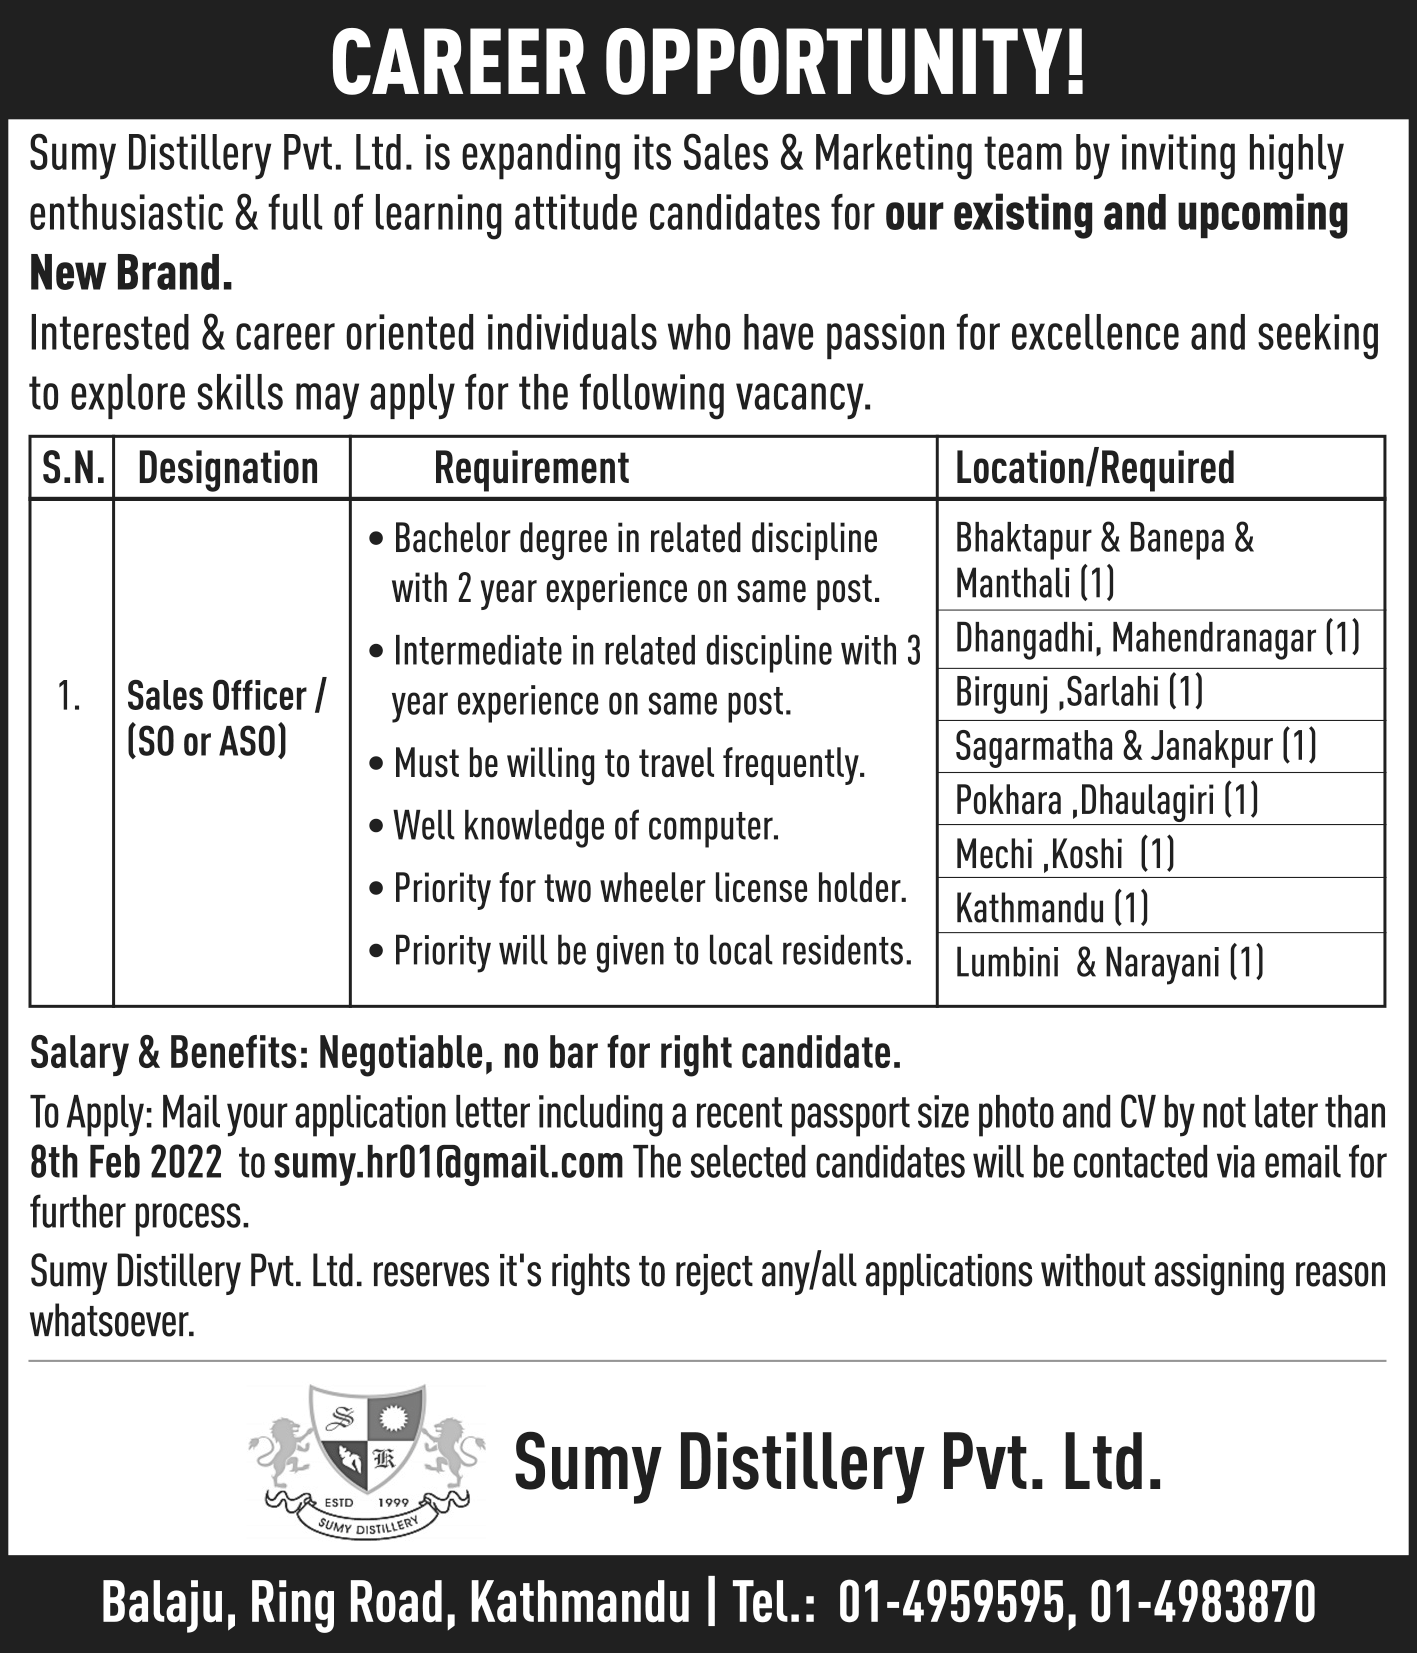 career opportunity at sumy distillery pvt ltd